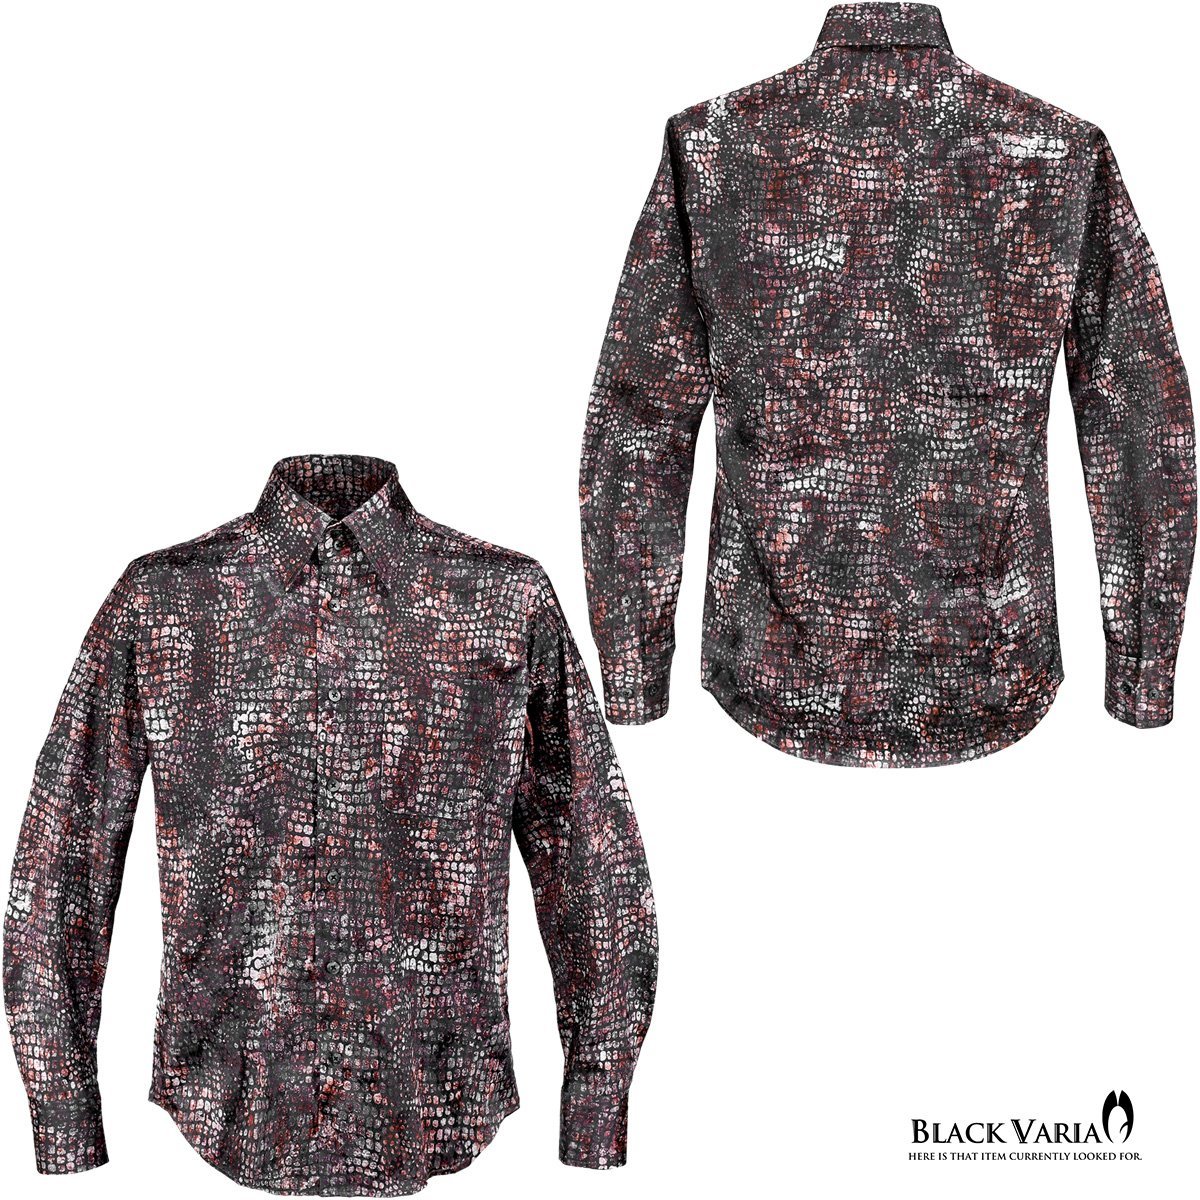 211200-win BlackVaria ドゥエボットーニ 蛇柄 サテンドレスシャツ 衿先スナップボタン パイソンジャガード メンズ(レッド赤ワイン) XL_画像3